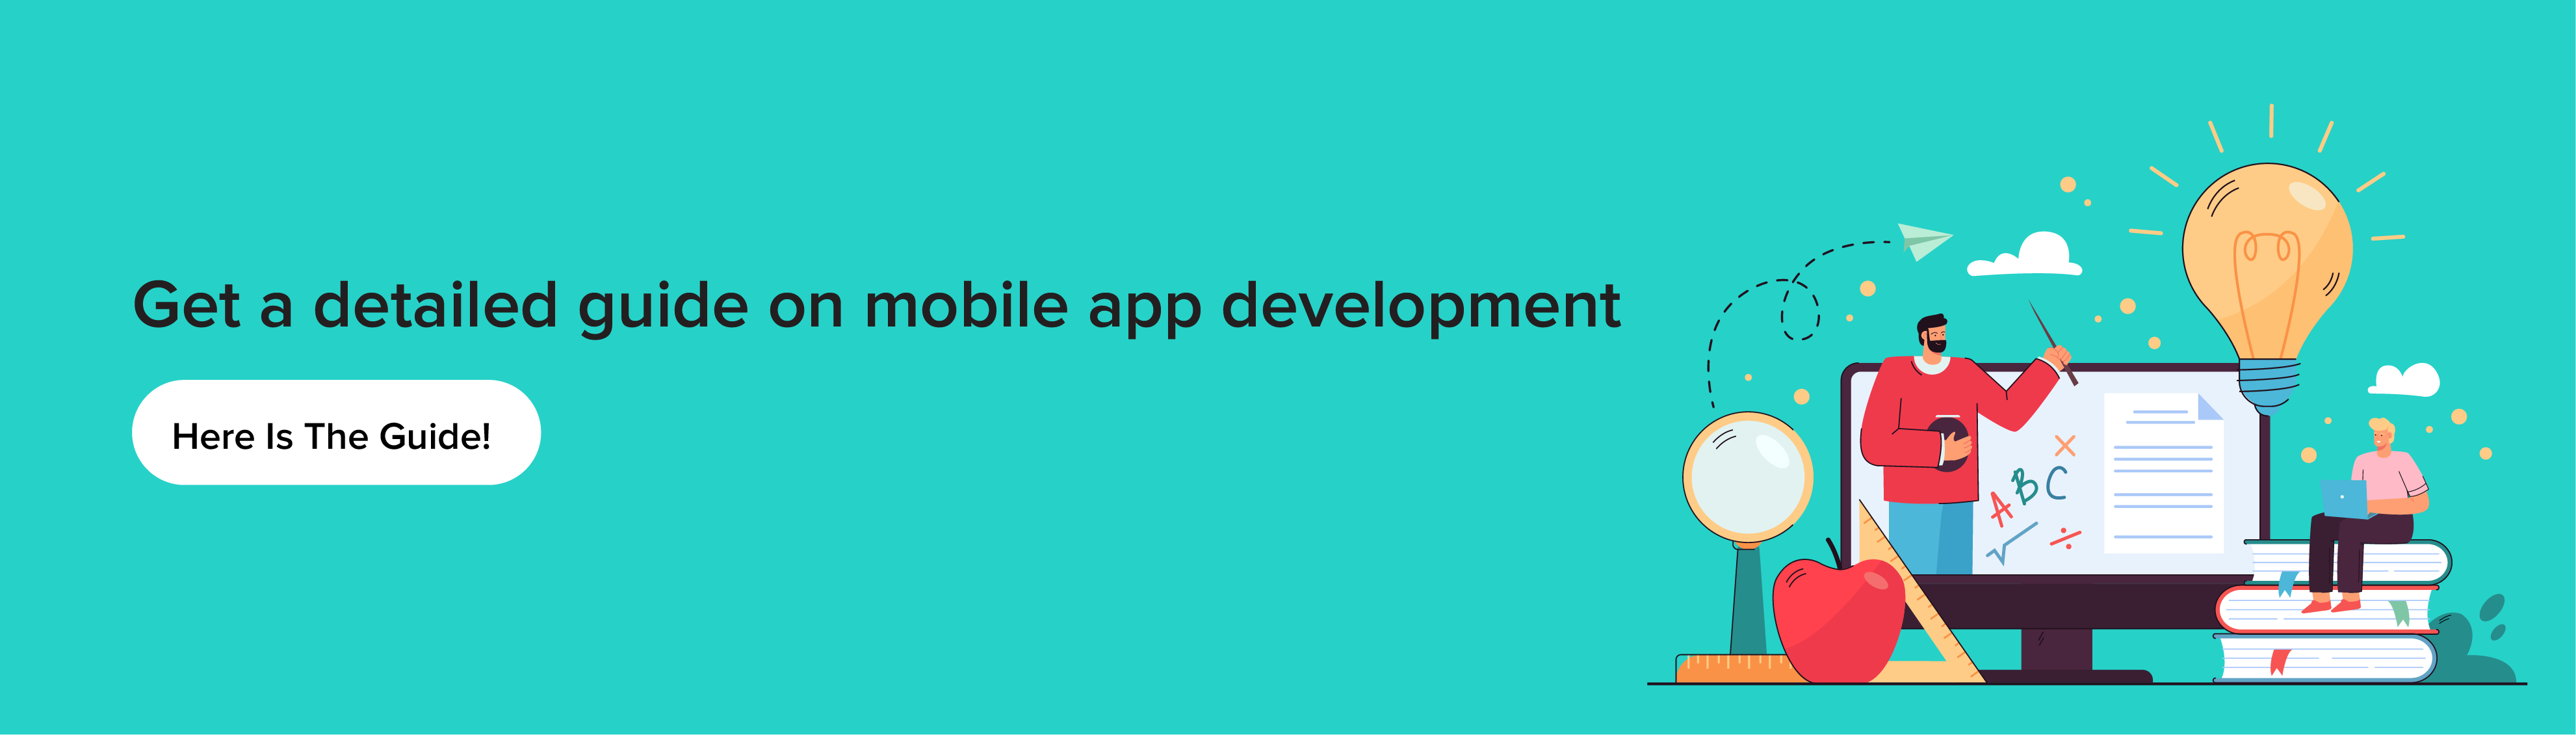 Mobile-app-development-guide